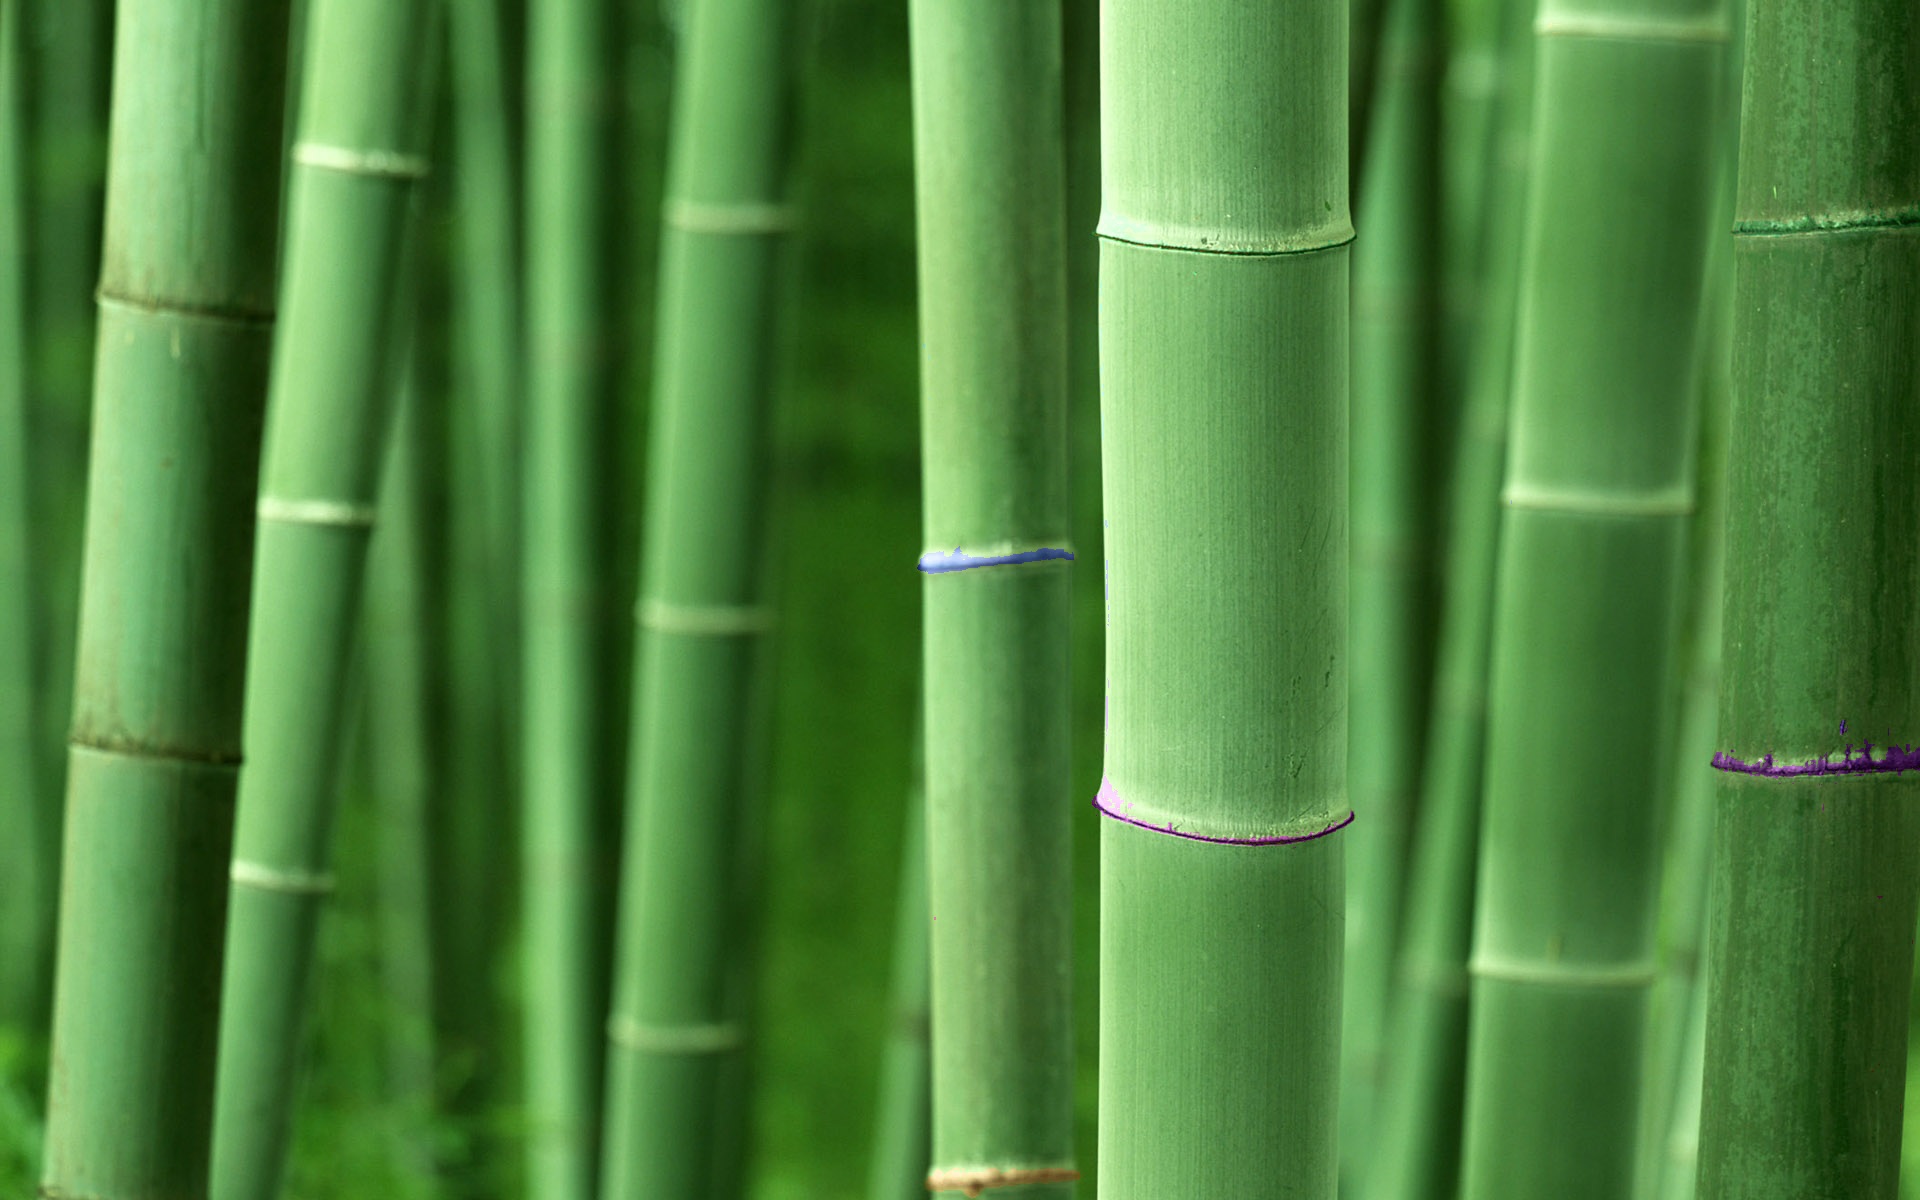 183230 descargar imagen bambú, tierra/naturaleza: fondos de pantalla y protectores de pantalla gratis